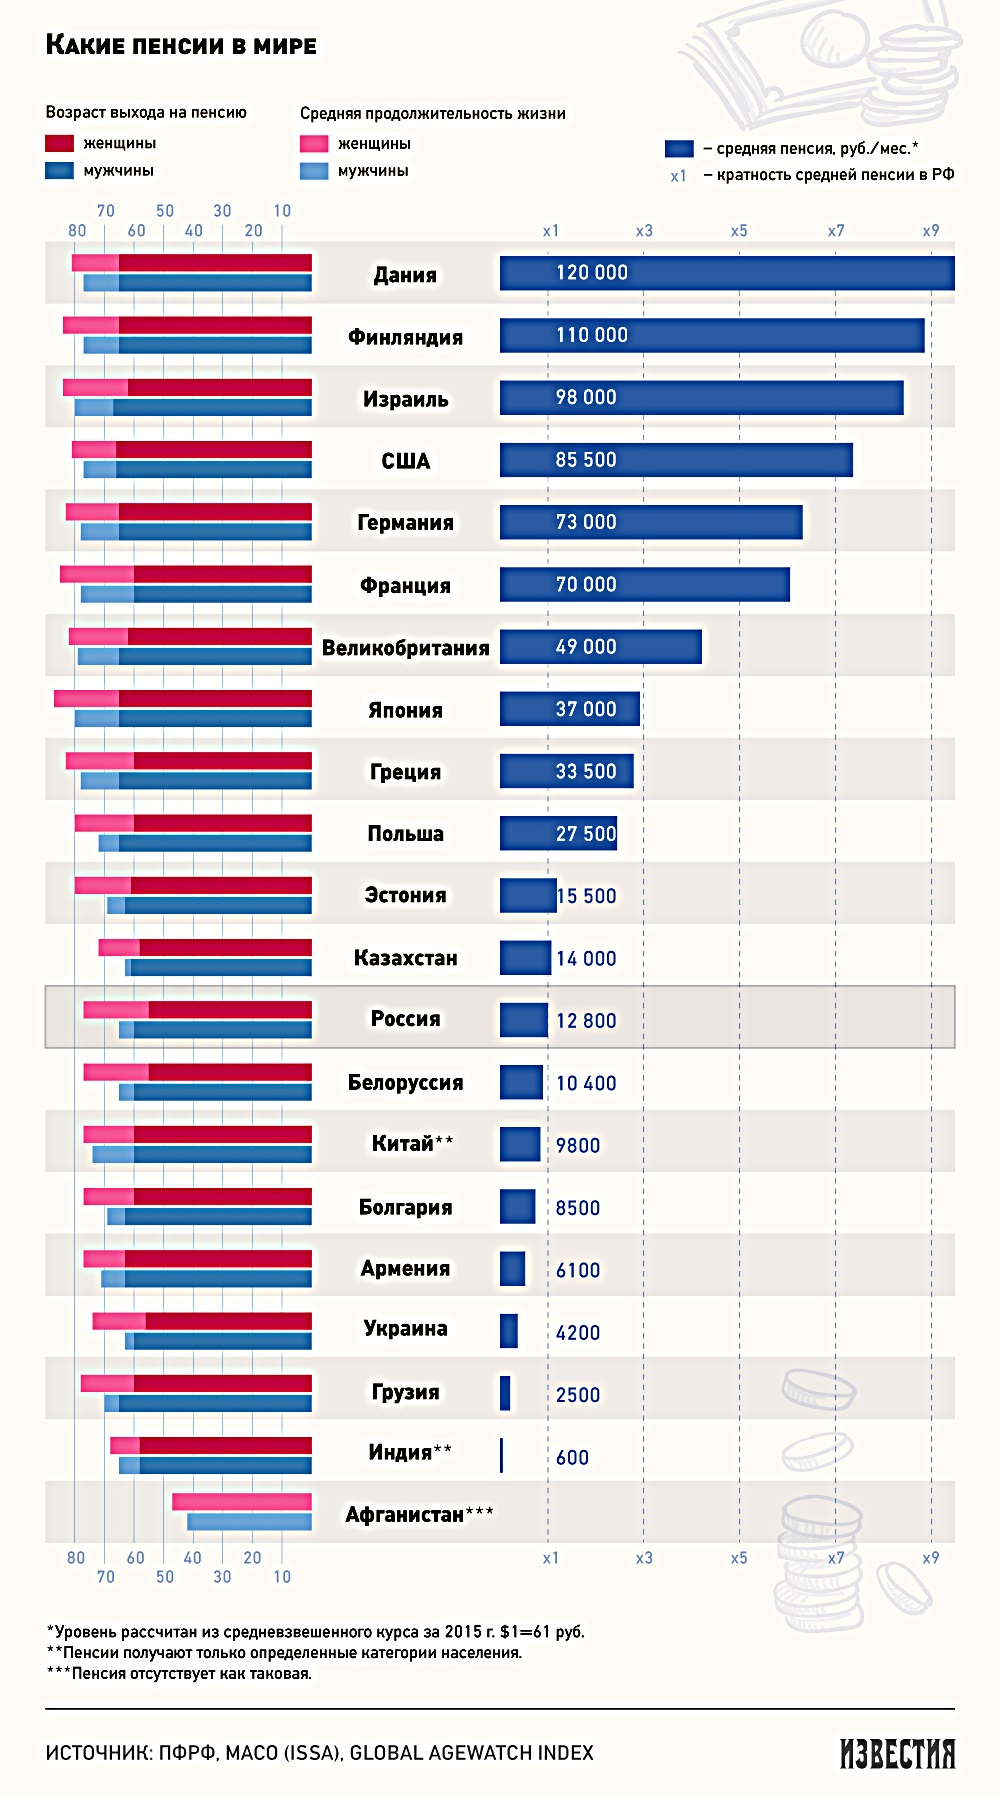 Возраст пенсии в странах. Размер пенсии в разных странах.